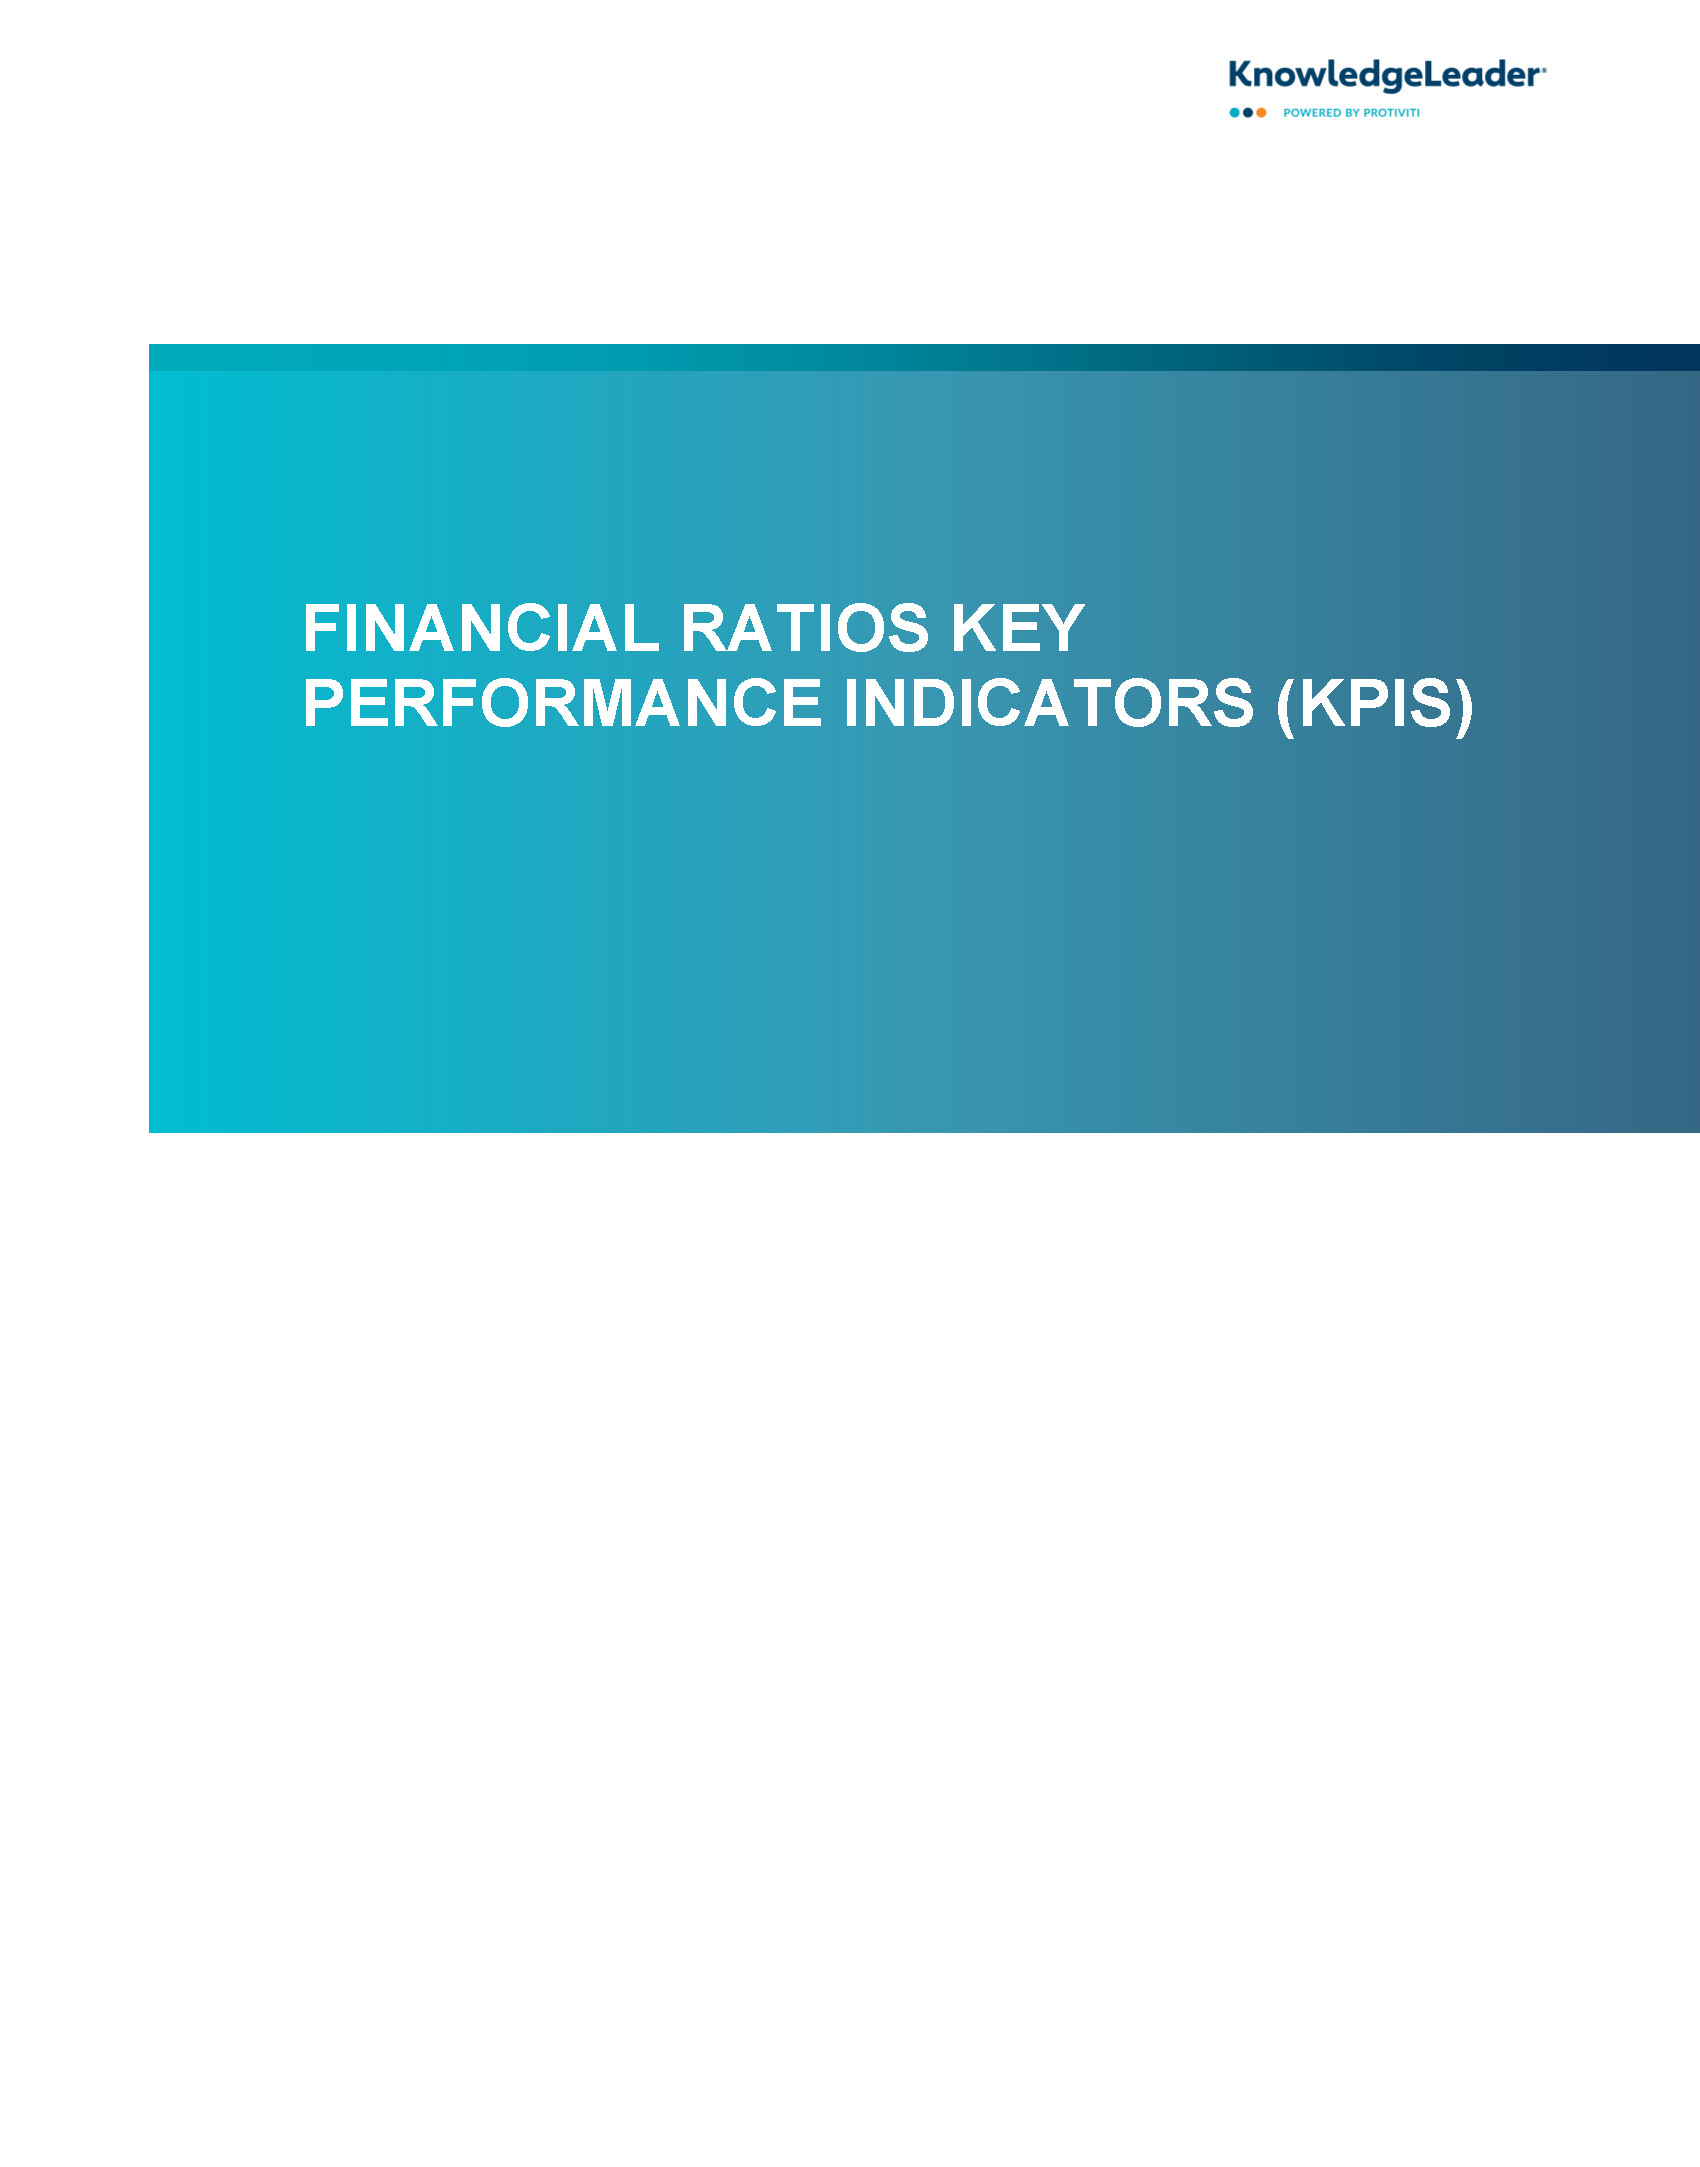 Financial Ratio Key Performance Indicators (KPIs)